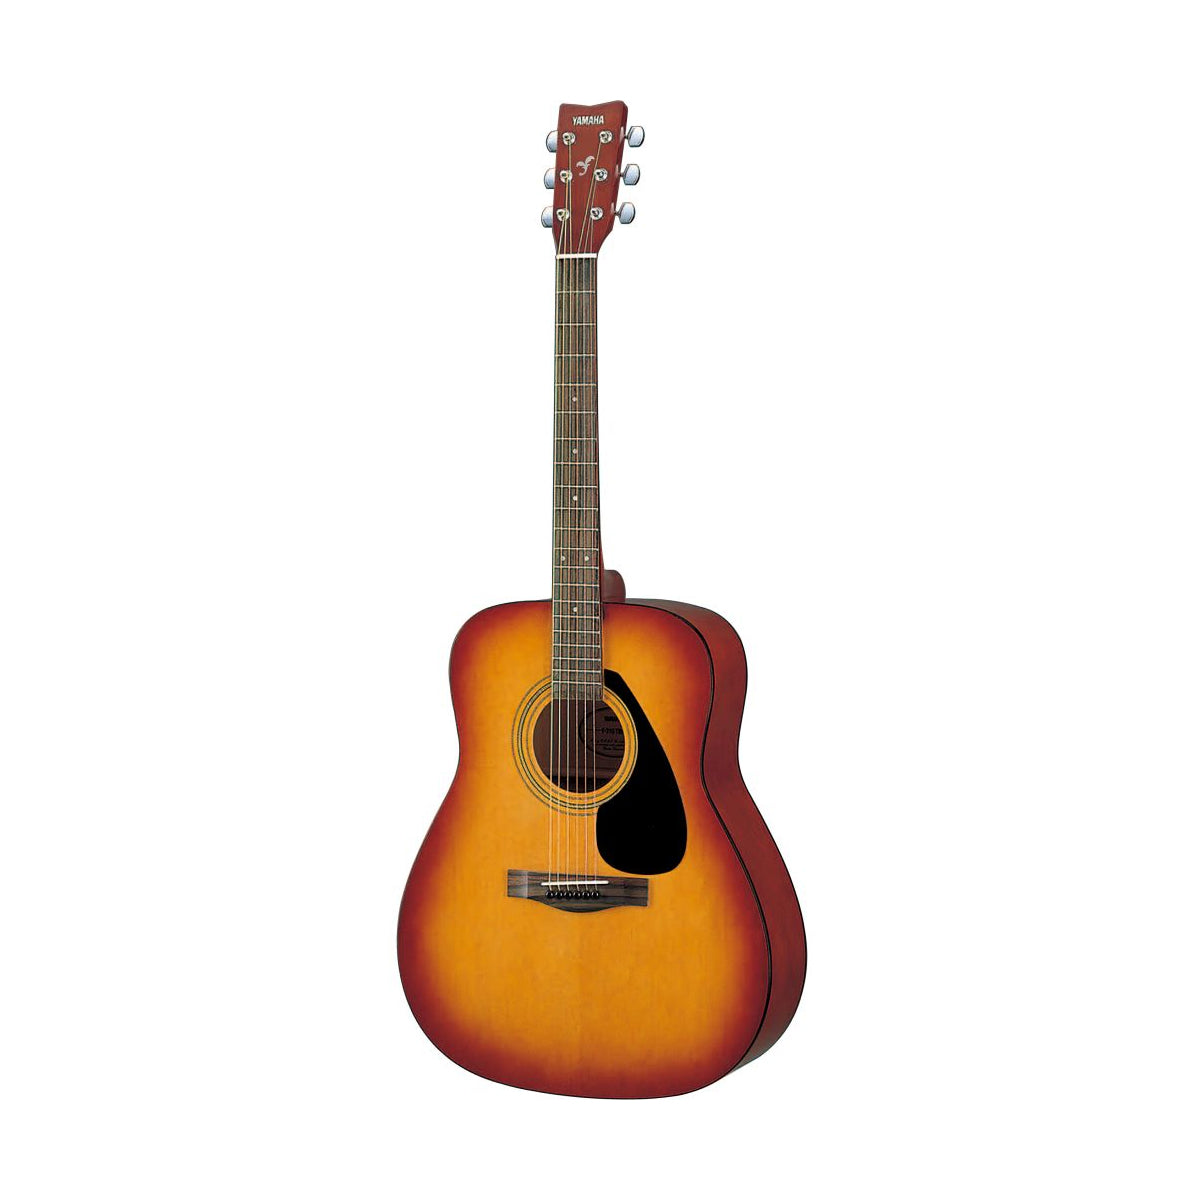 Yamaha F310 TBS (Brown Sunburst) Acoustic Guitar